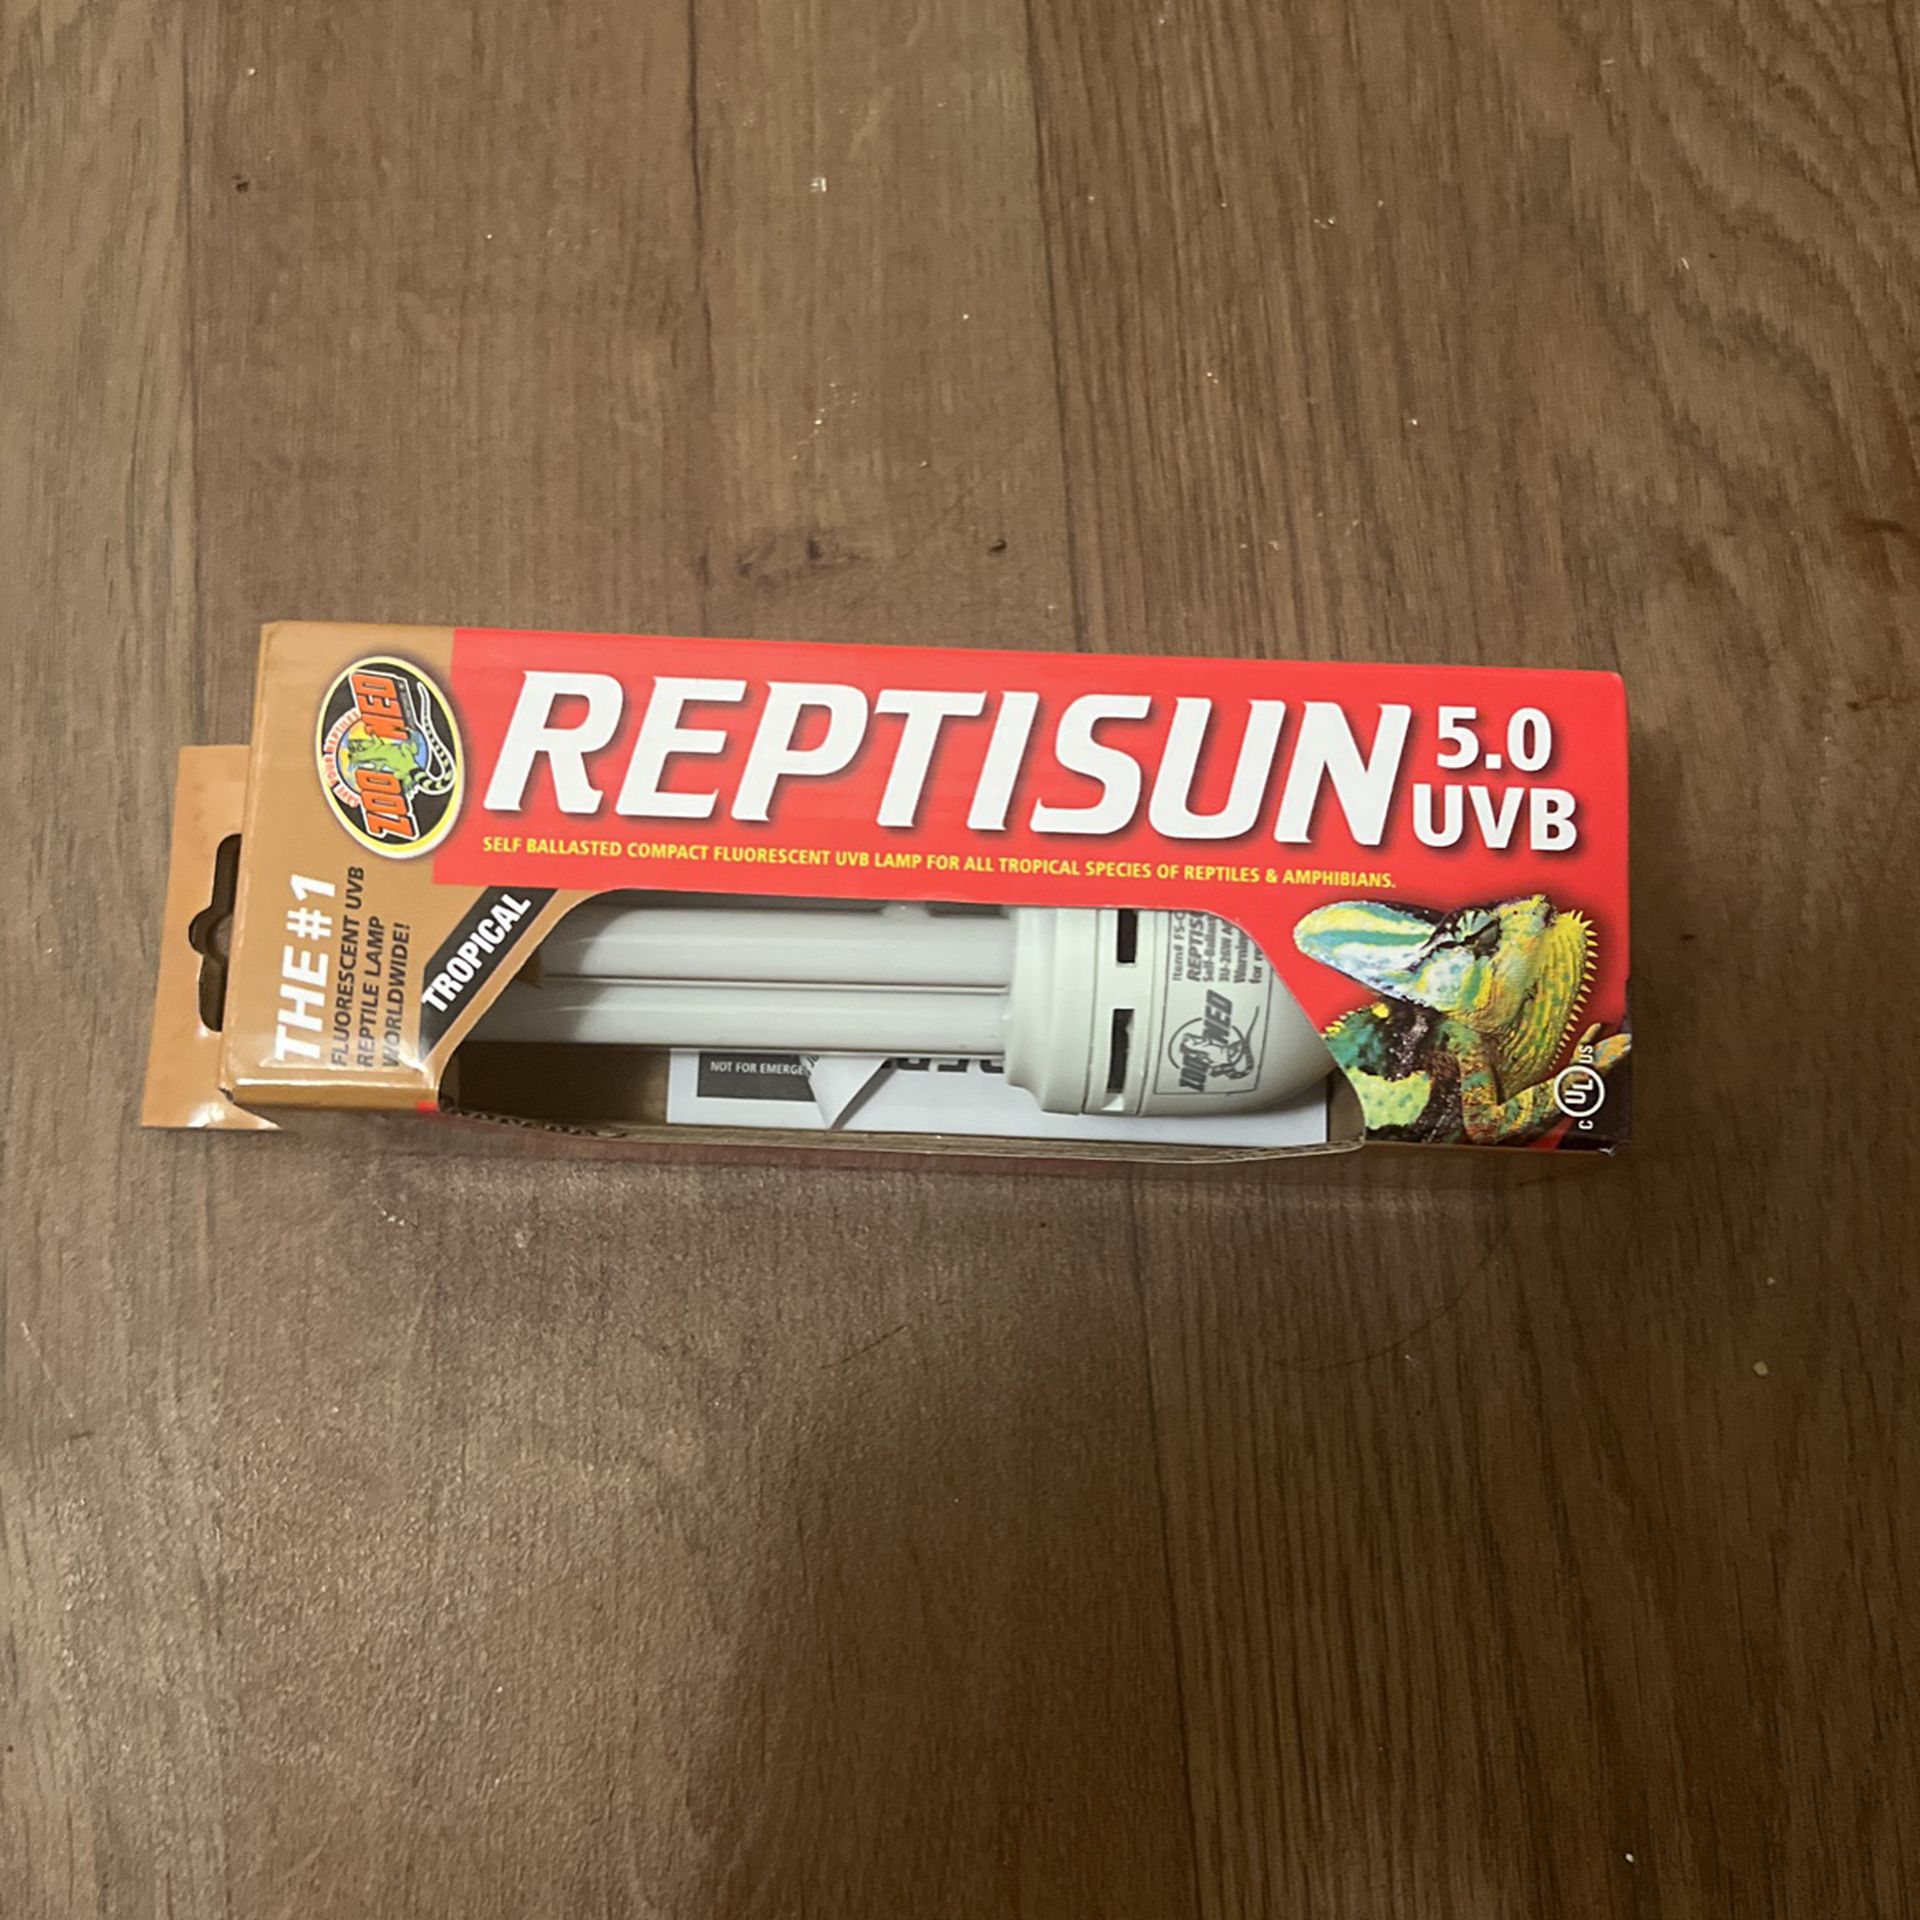 REPTISUN 5.0 Tropical Reptile heat and light lamp